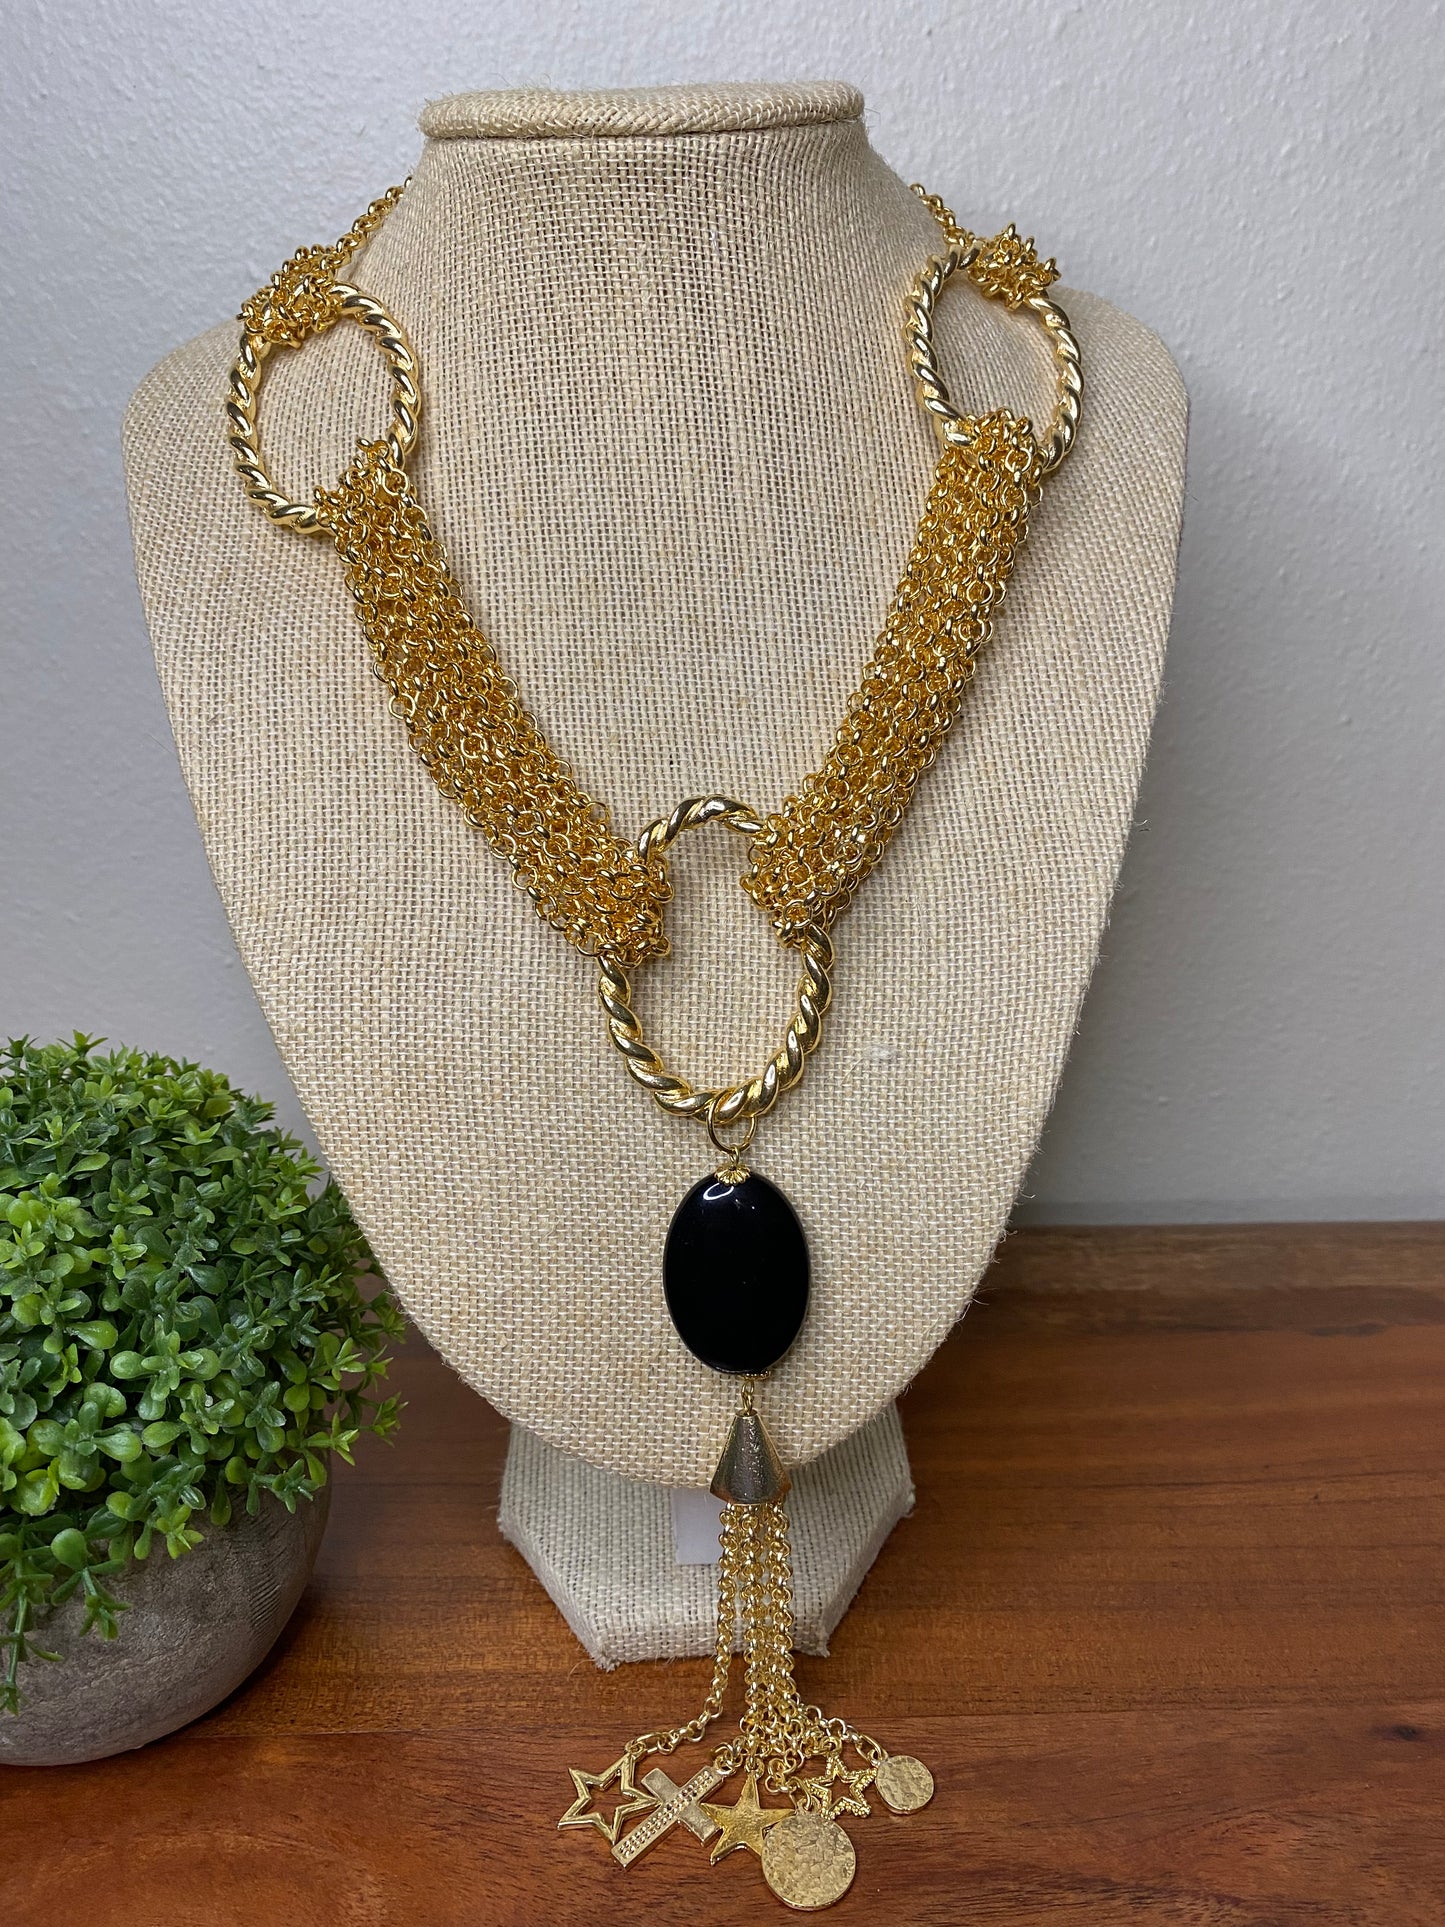 Black stone necklace